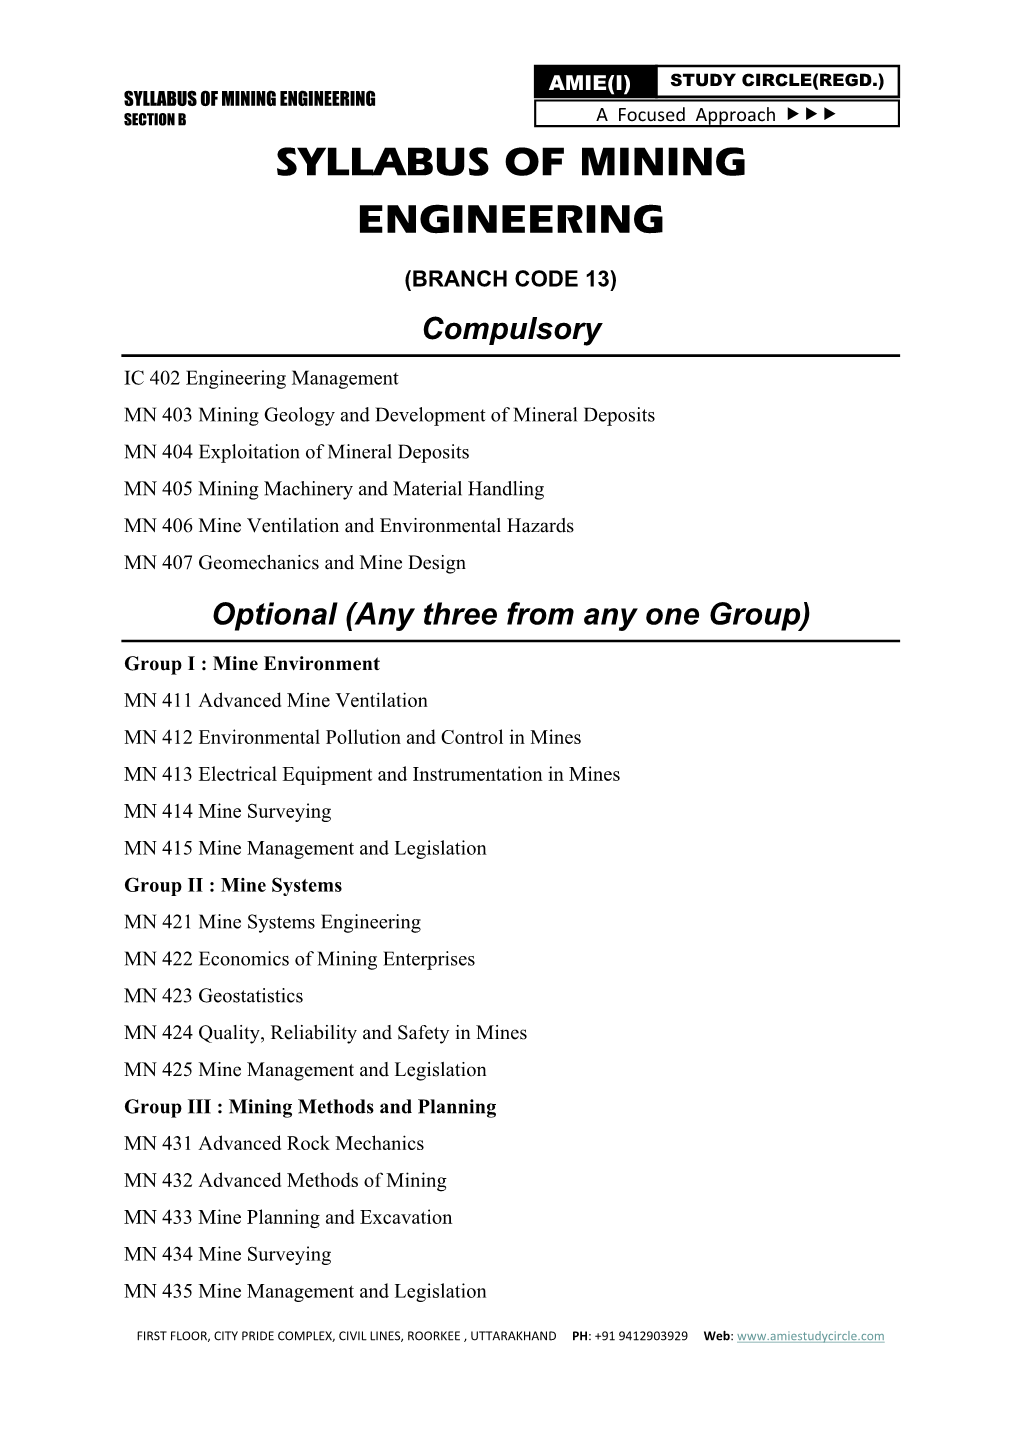 Syllabus of Mining engineering (Branch Code 13)